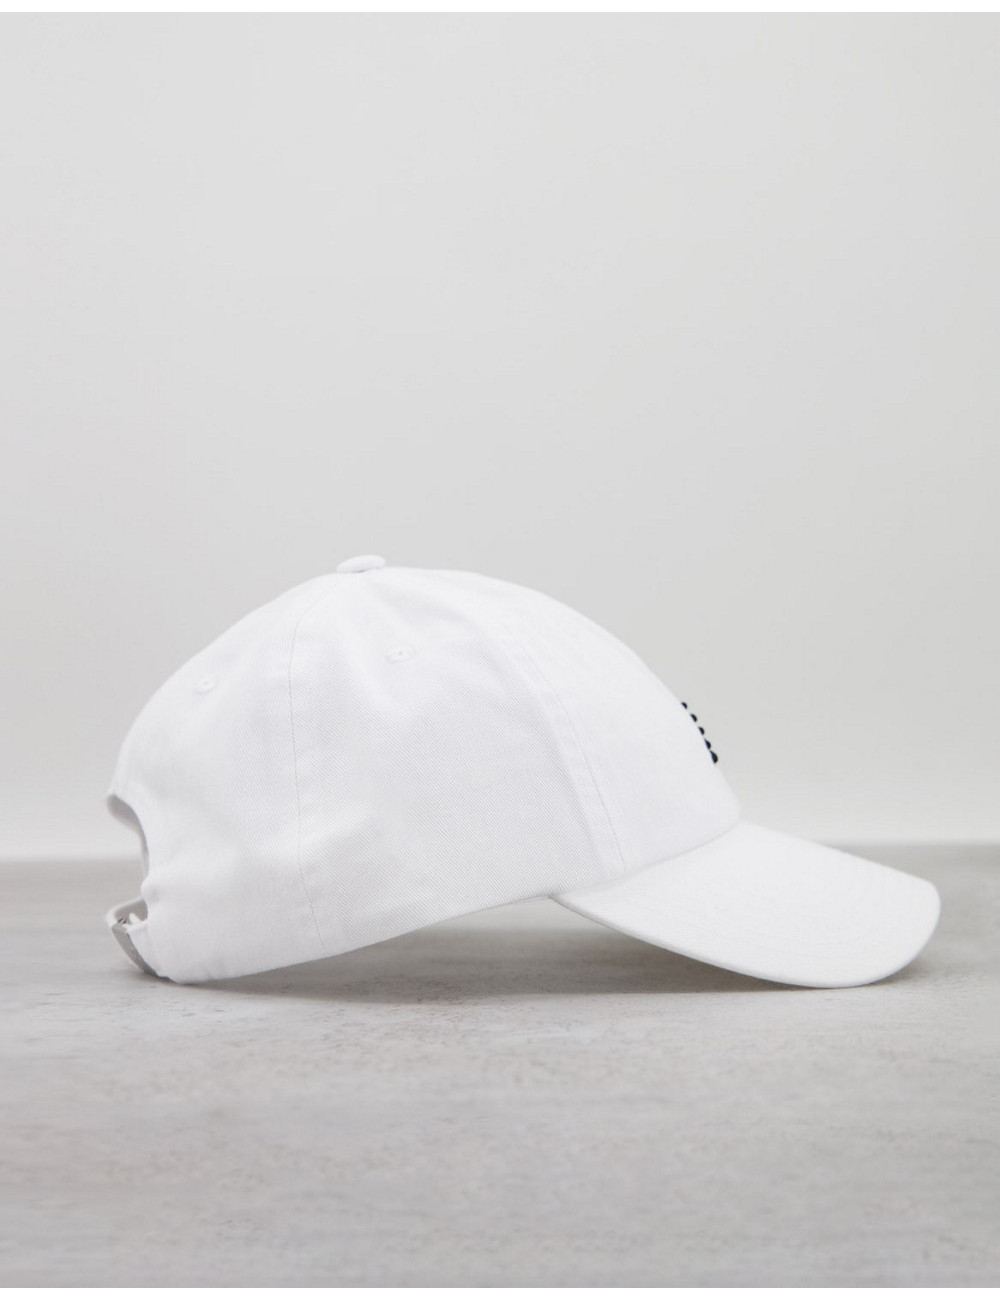 New Balance logo cap in white